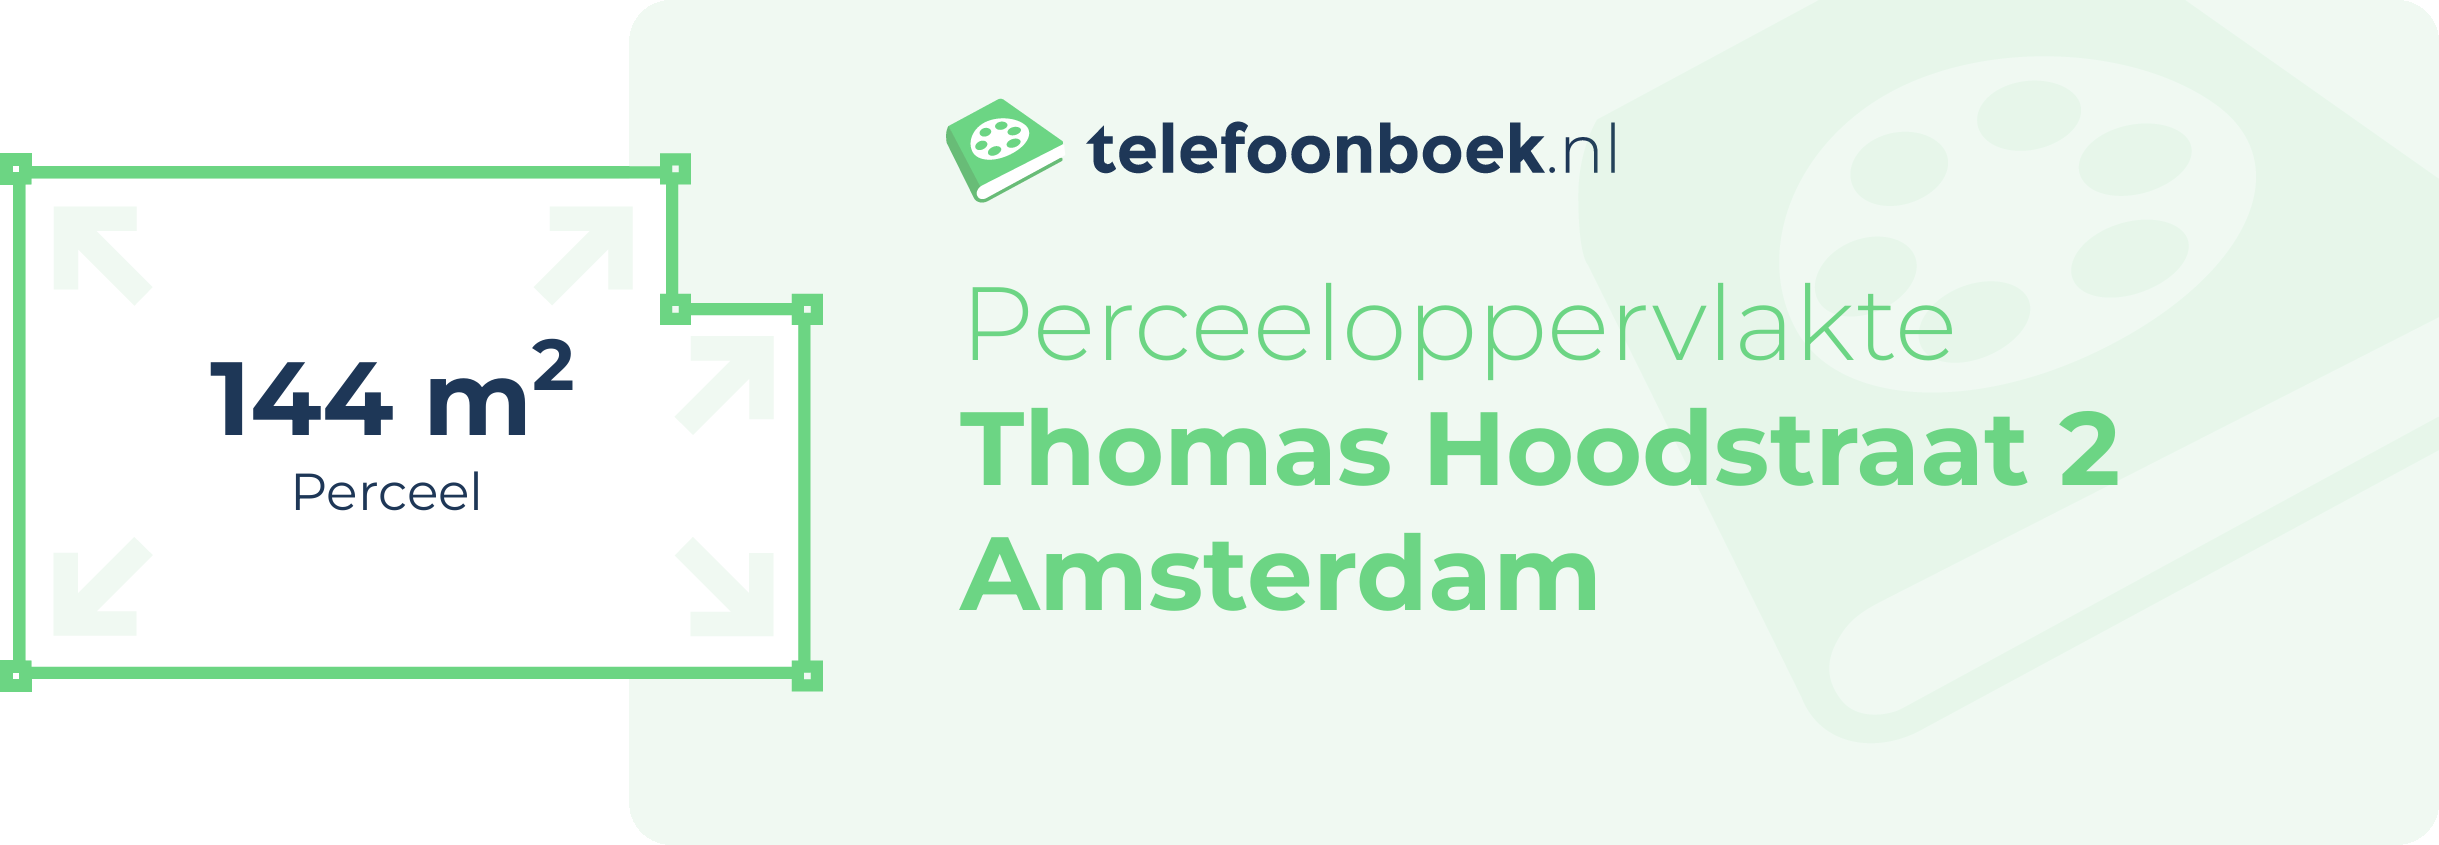 Perceeloppervlakte Thomas Hoodstraat 2 Amsterdam